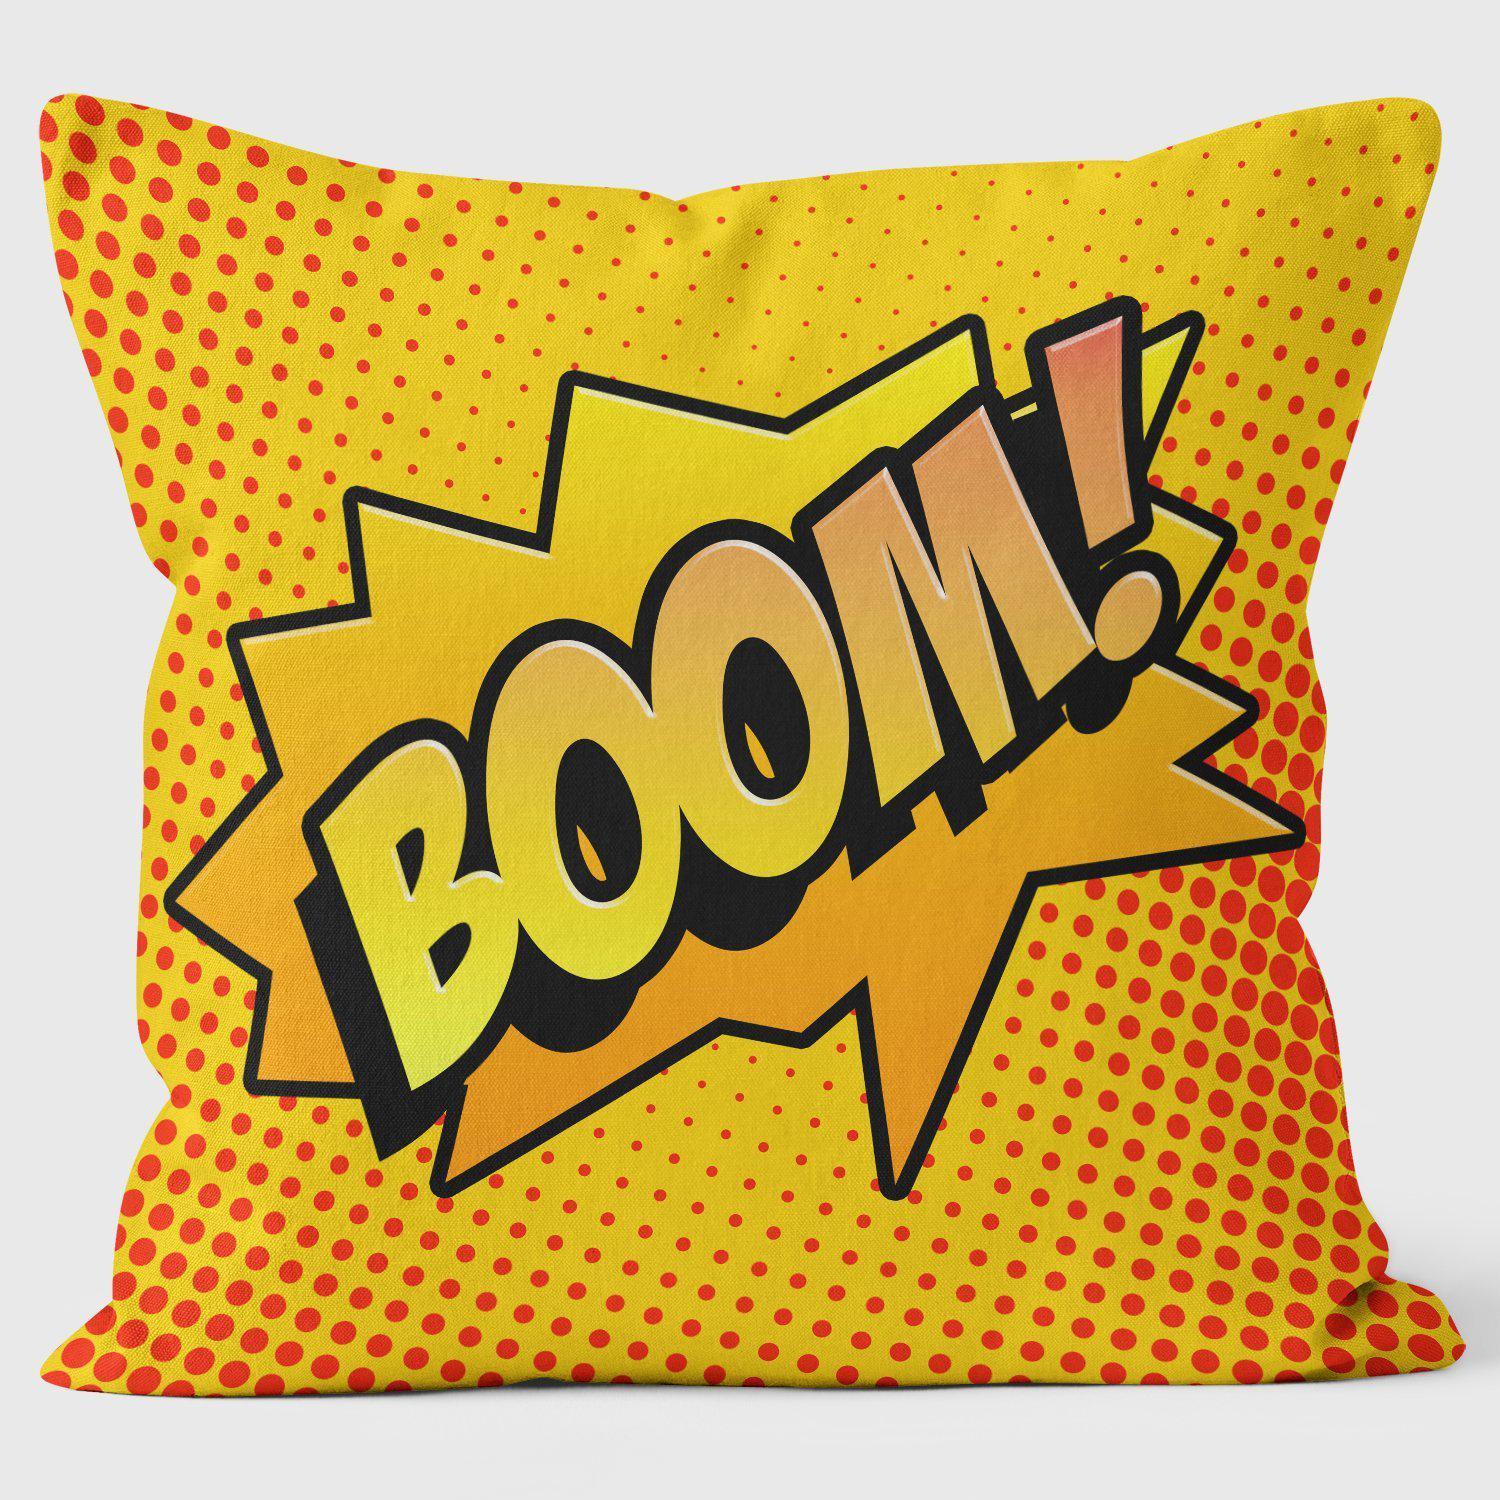 Boom! - Art Print Cushion - Handmade Cushions UK - WeLoveCushions